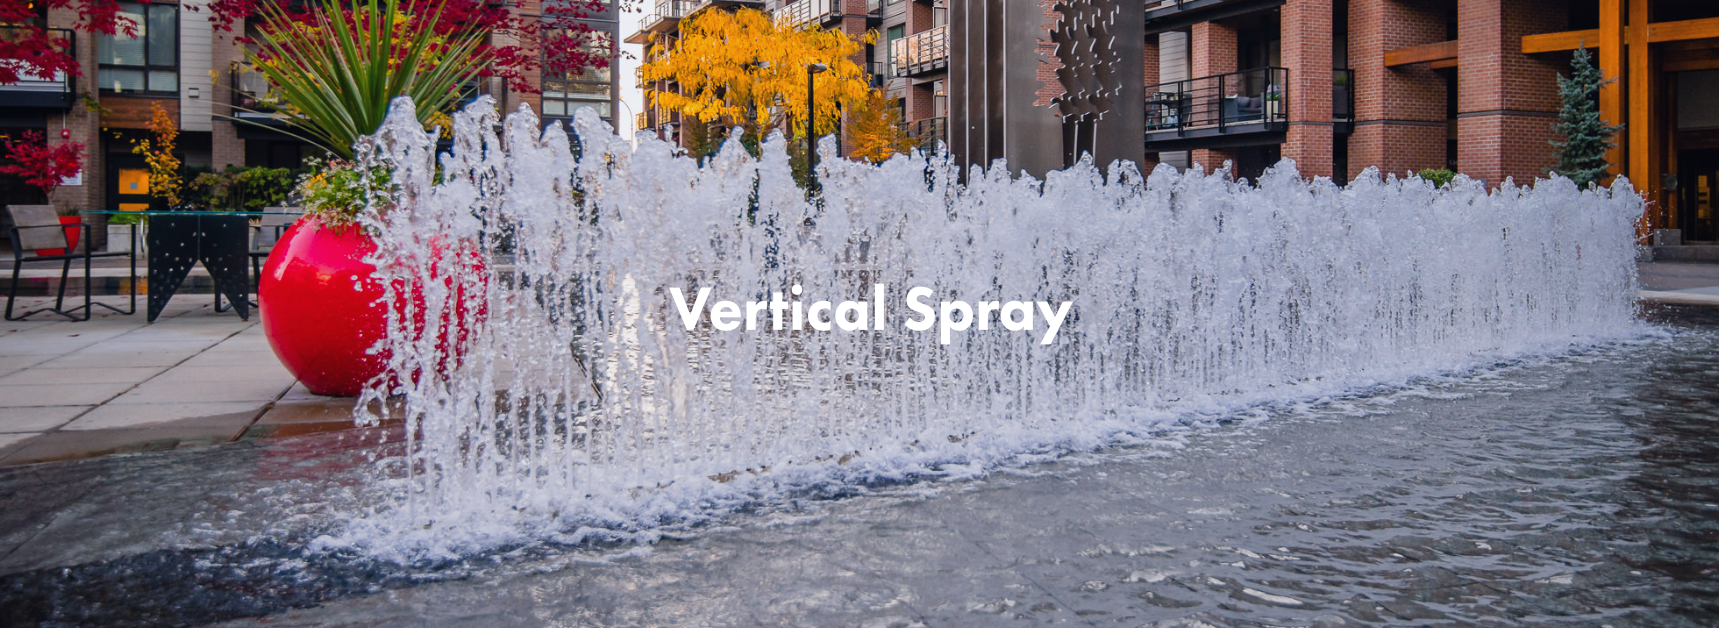 vertical spray